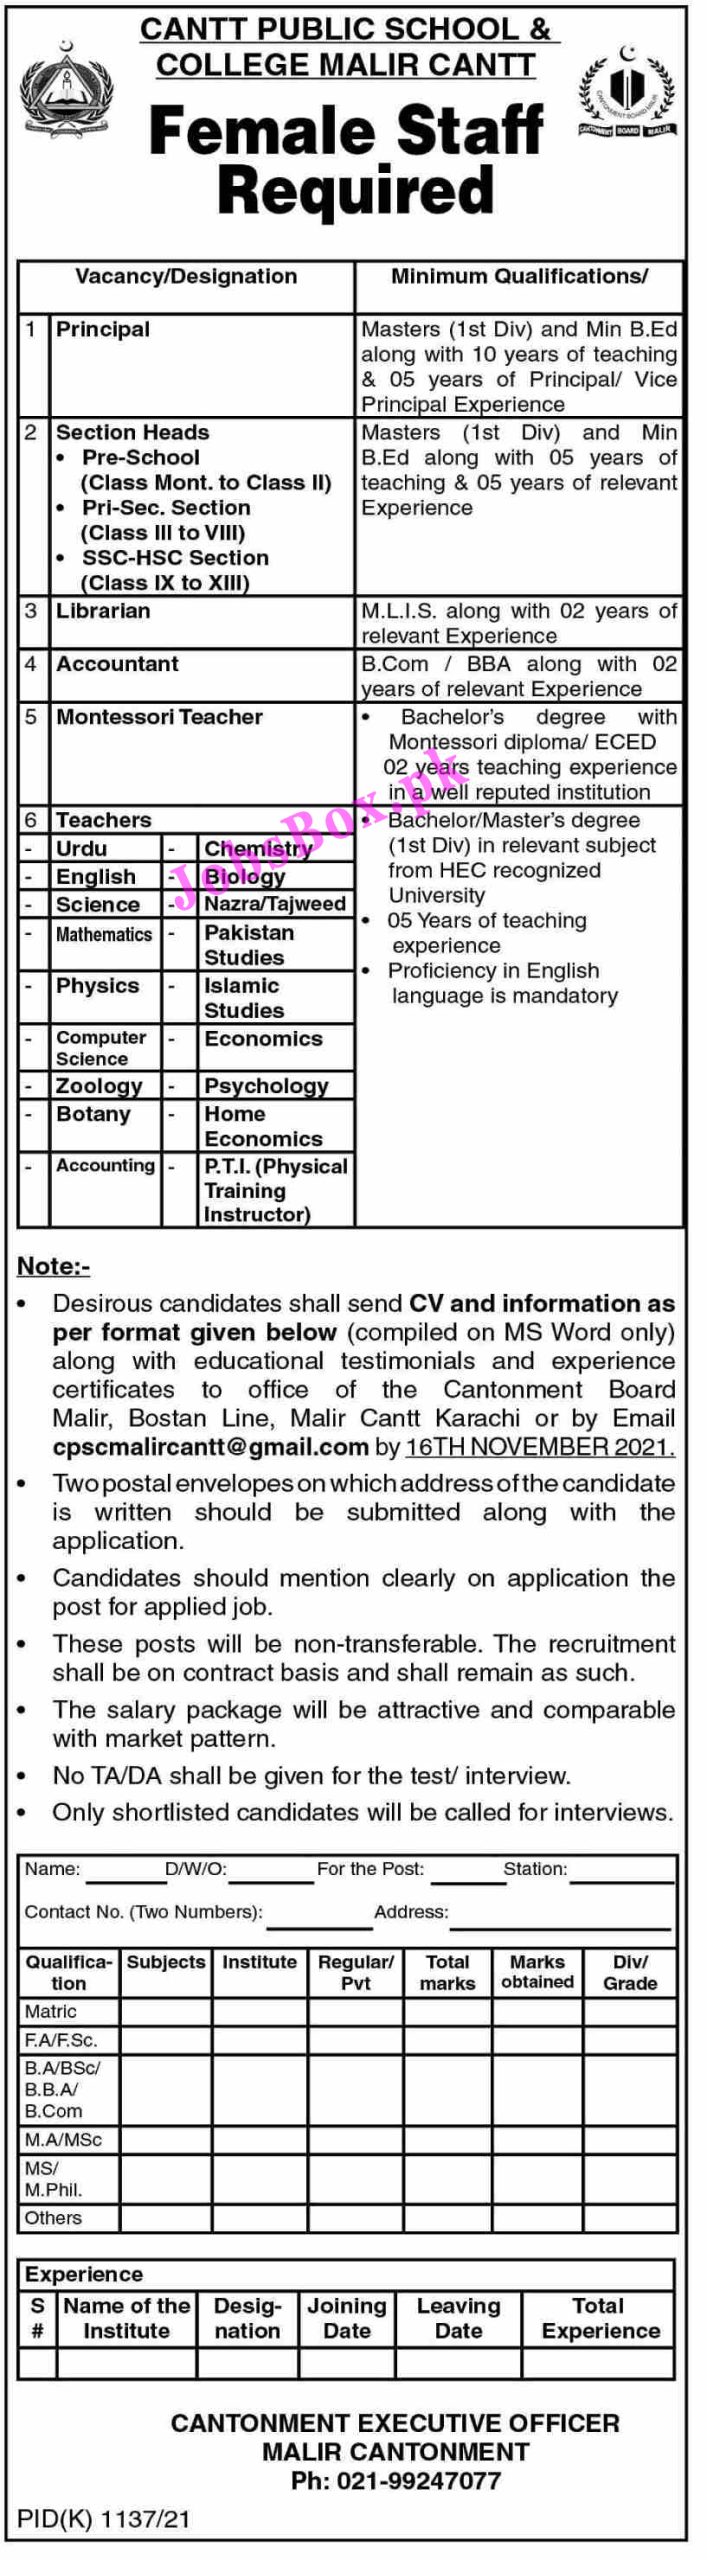 cpscmalircantt@gmail.com - Cantt Public School and College Malir Cantt Jobs 2021 in Pakistan